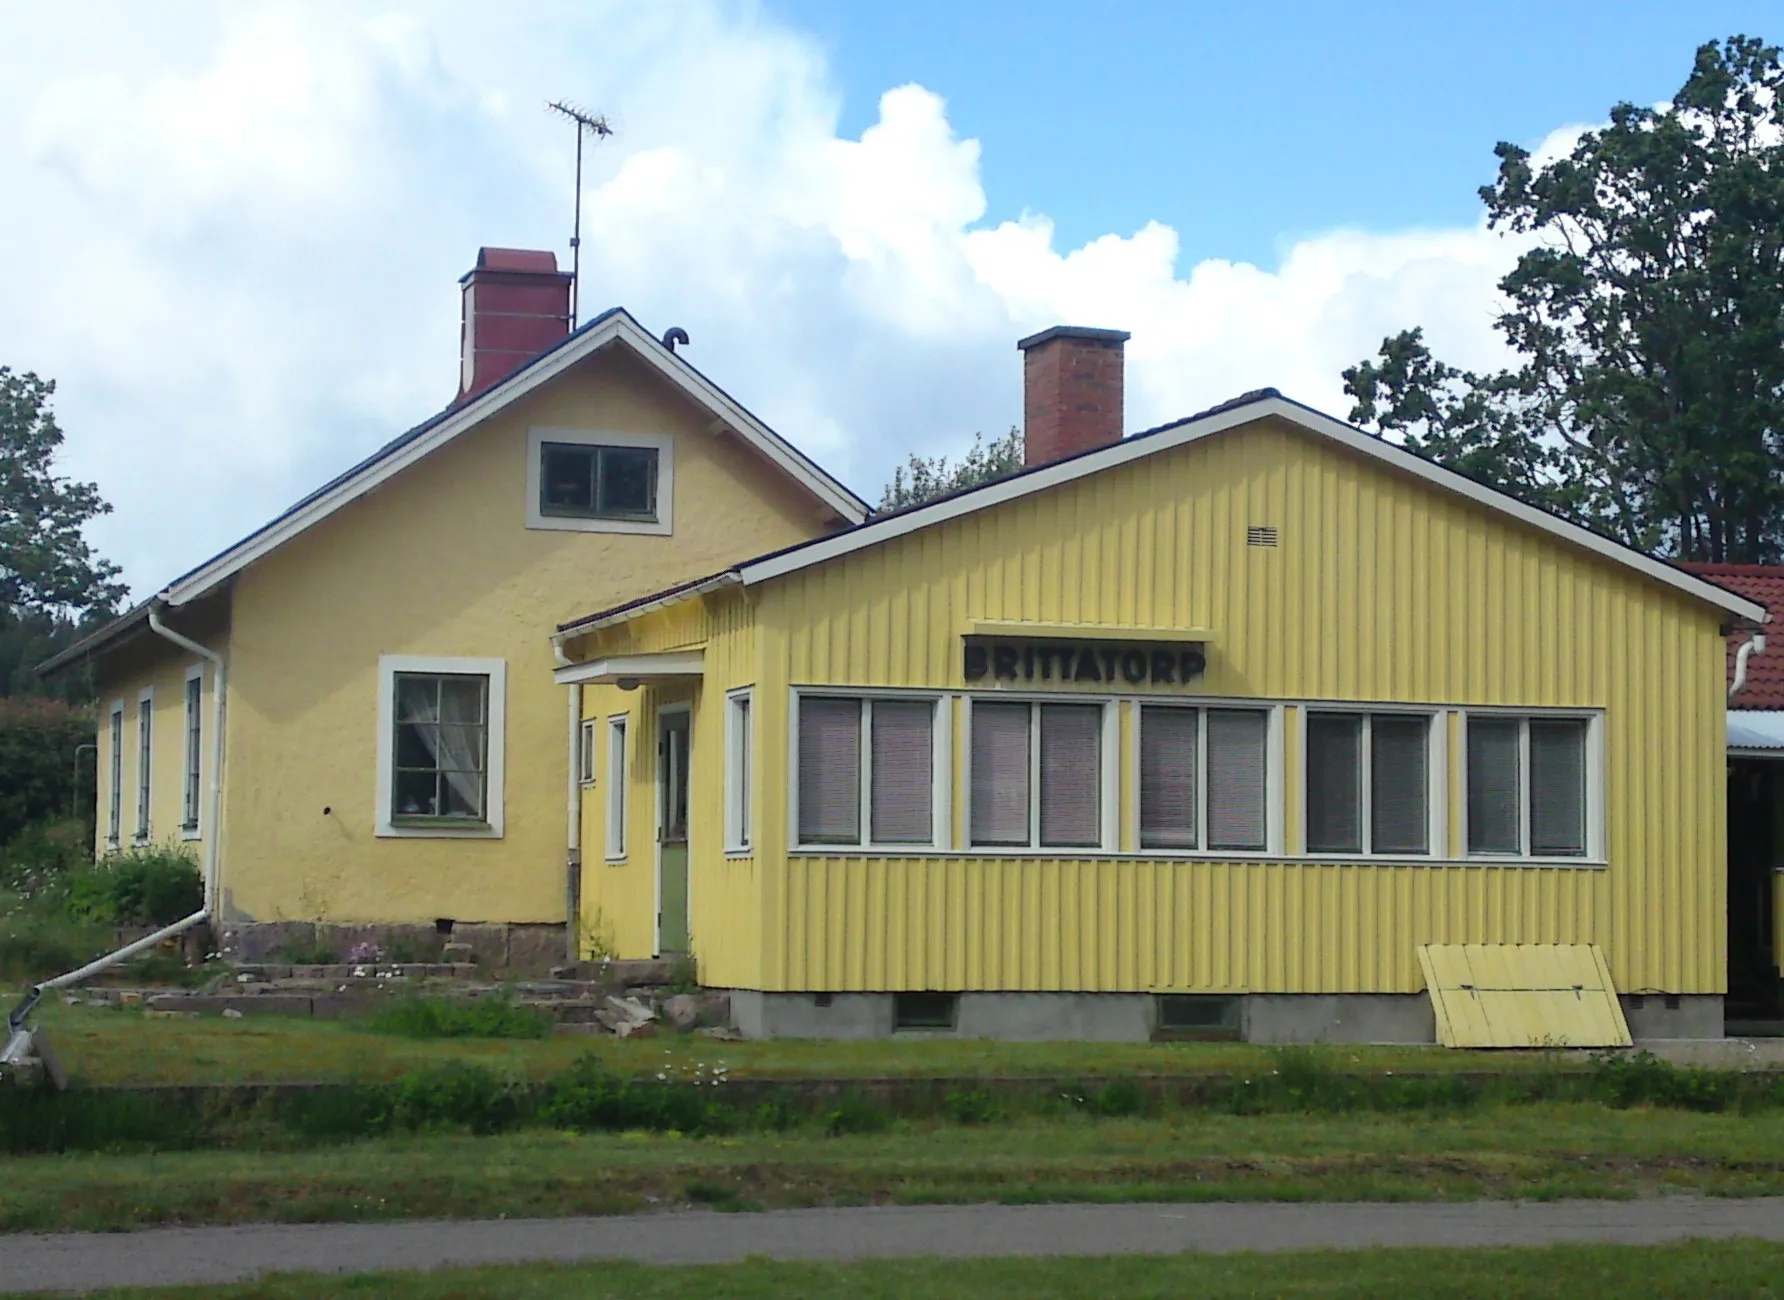 Photo showing: Brittatorp's station, Småland, Sweden